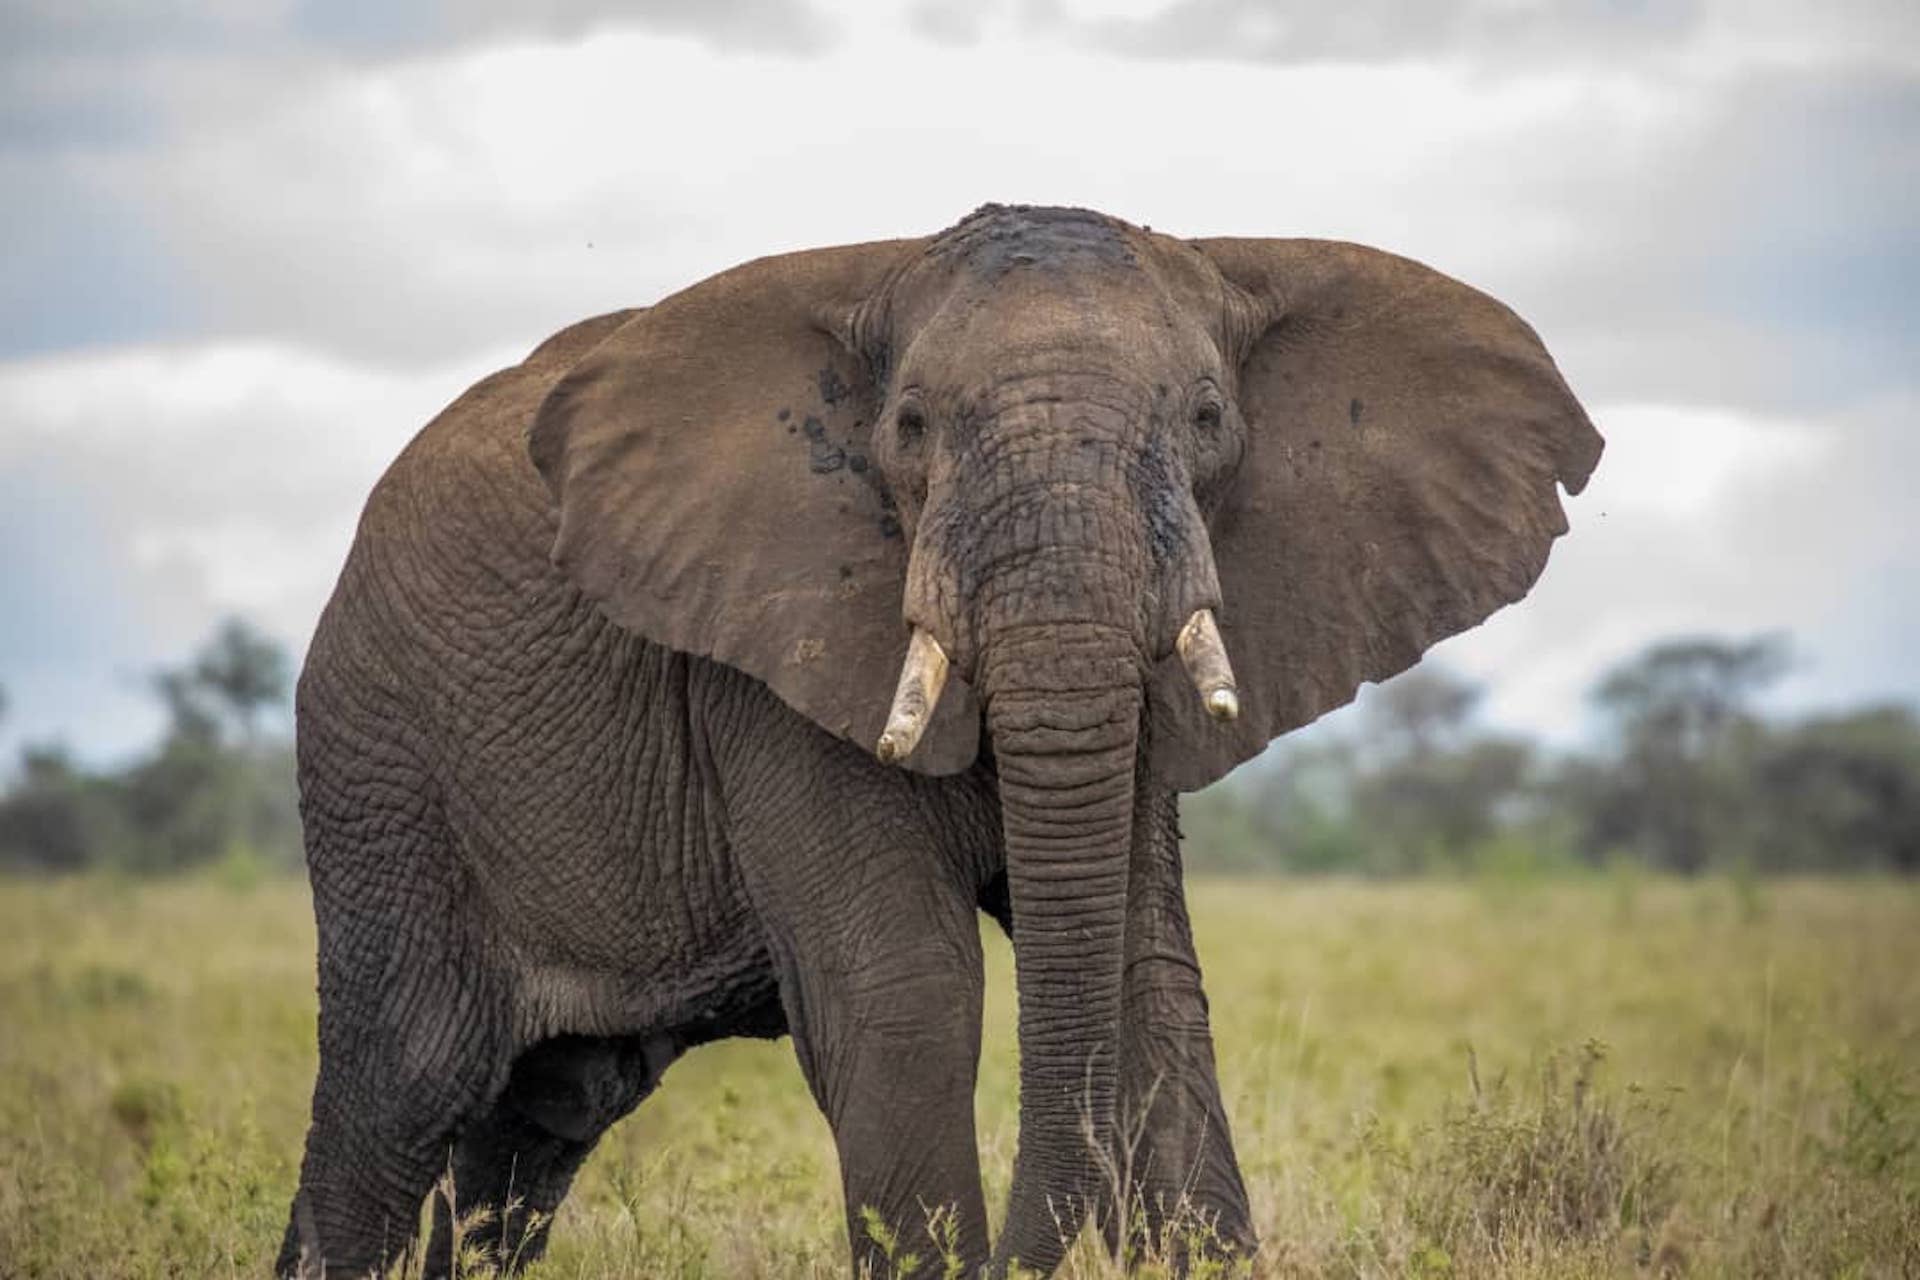 Kenyan Elephant in the Savanna with AWAT